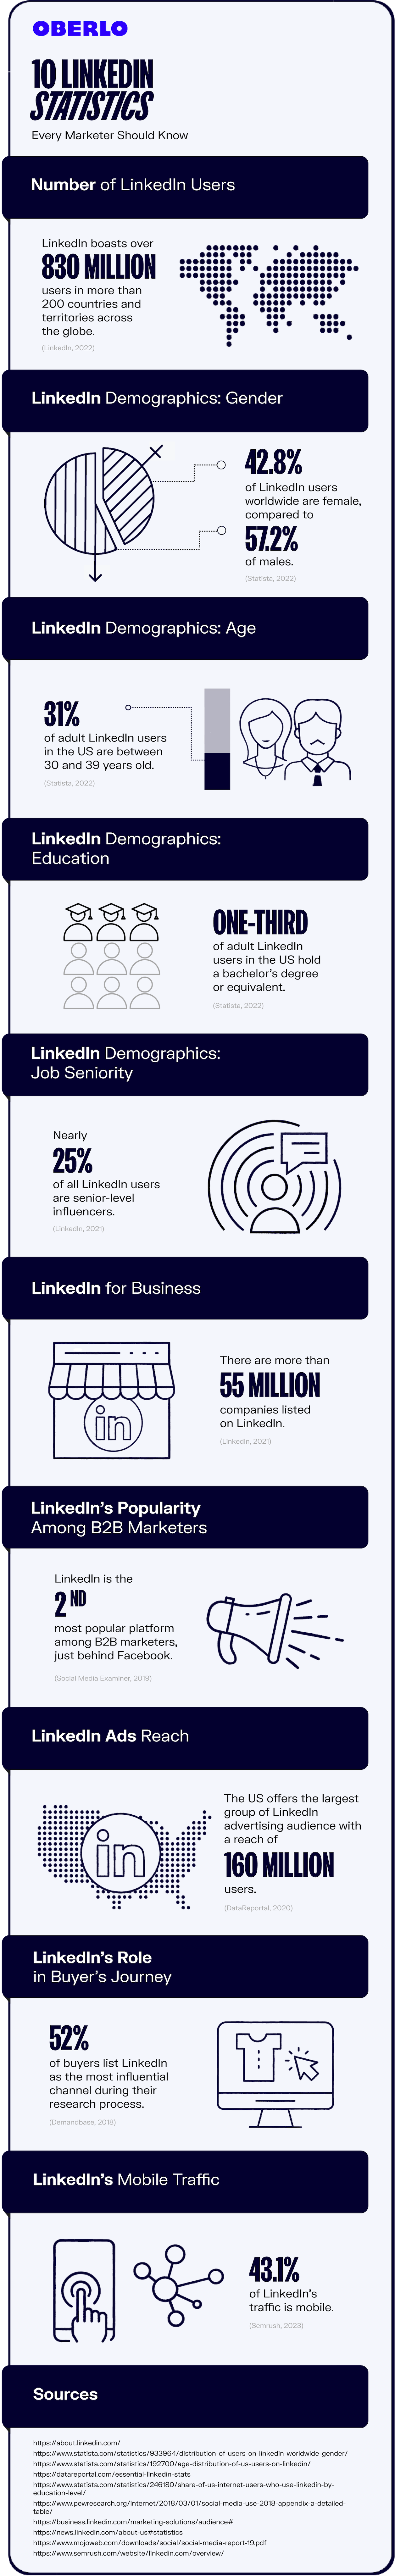 linkedin statistics full infographic